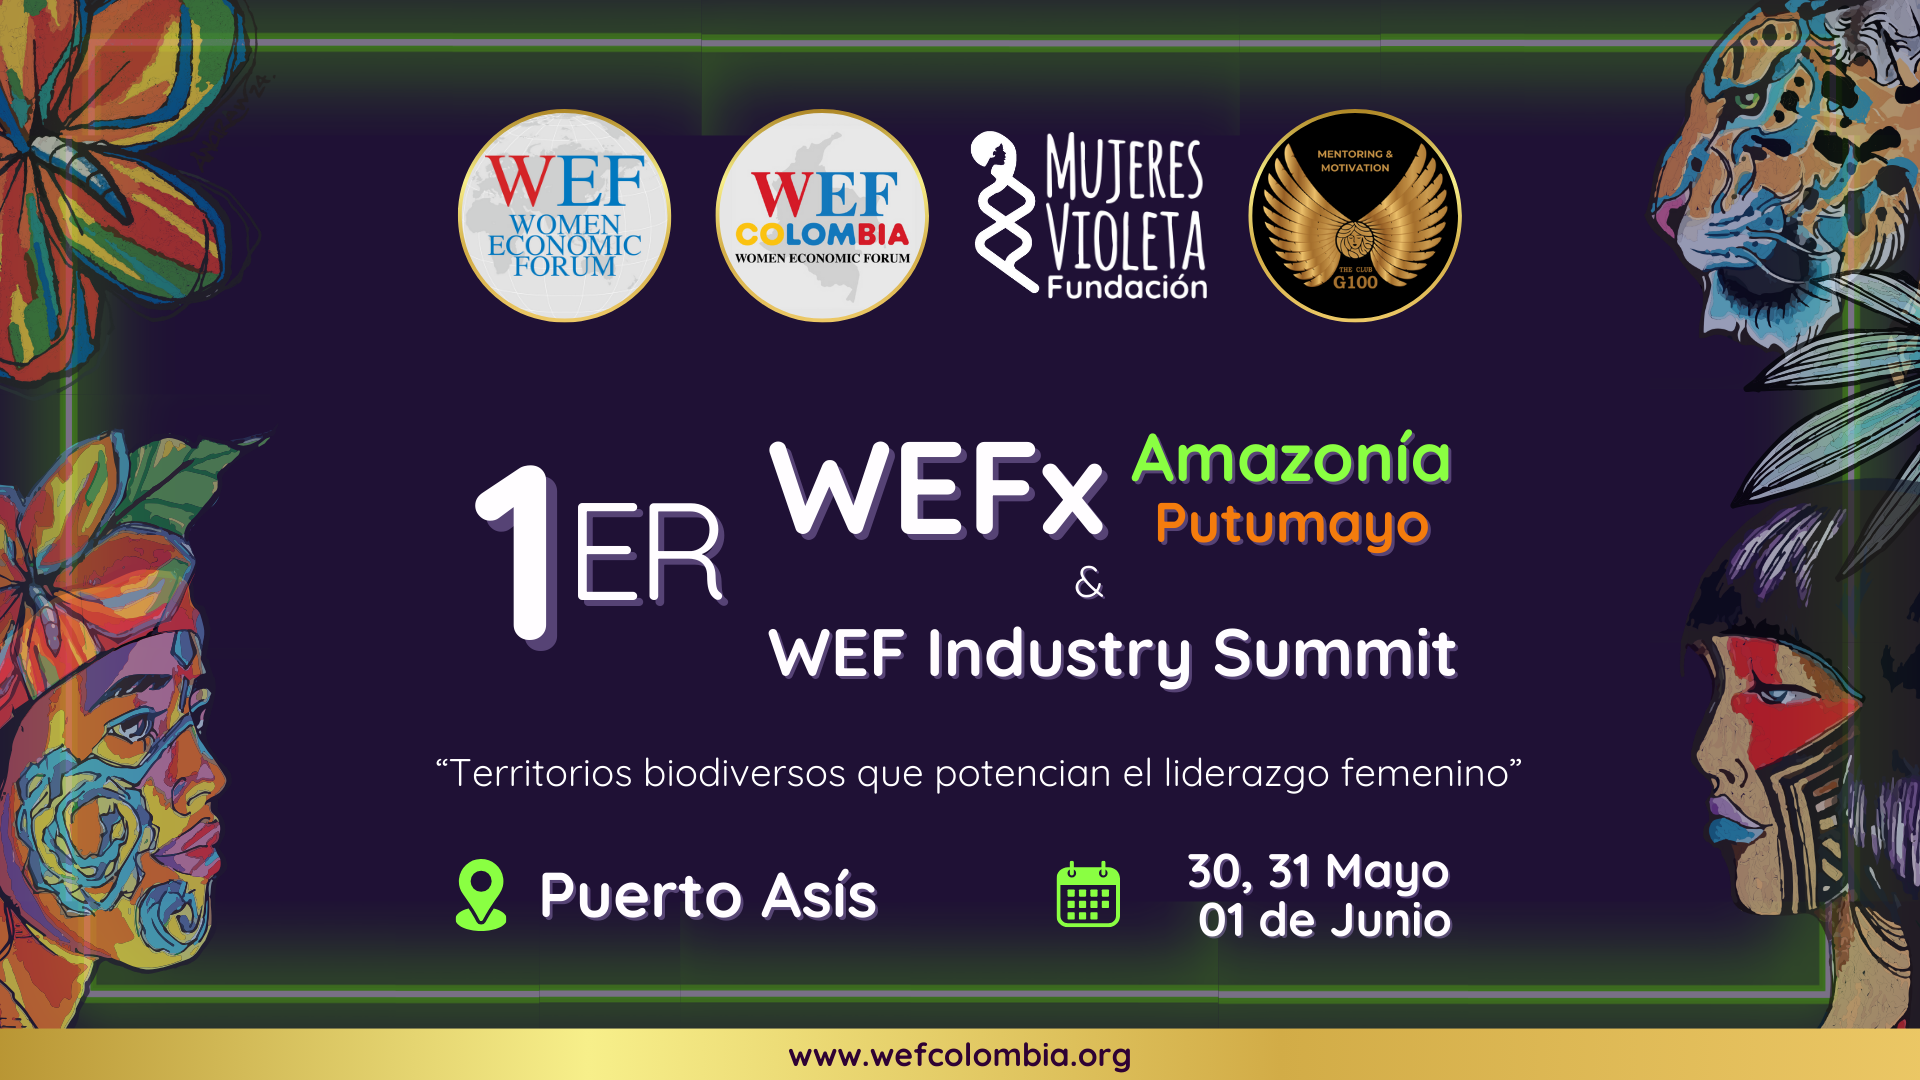 WEFx Regiones- Mujeres Violeta